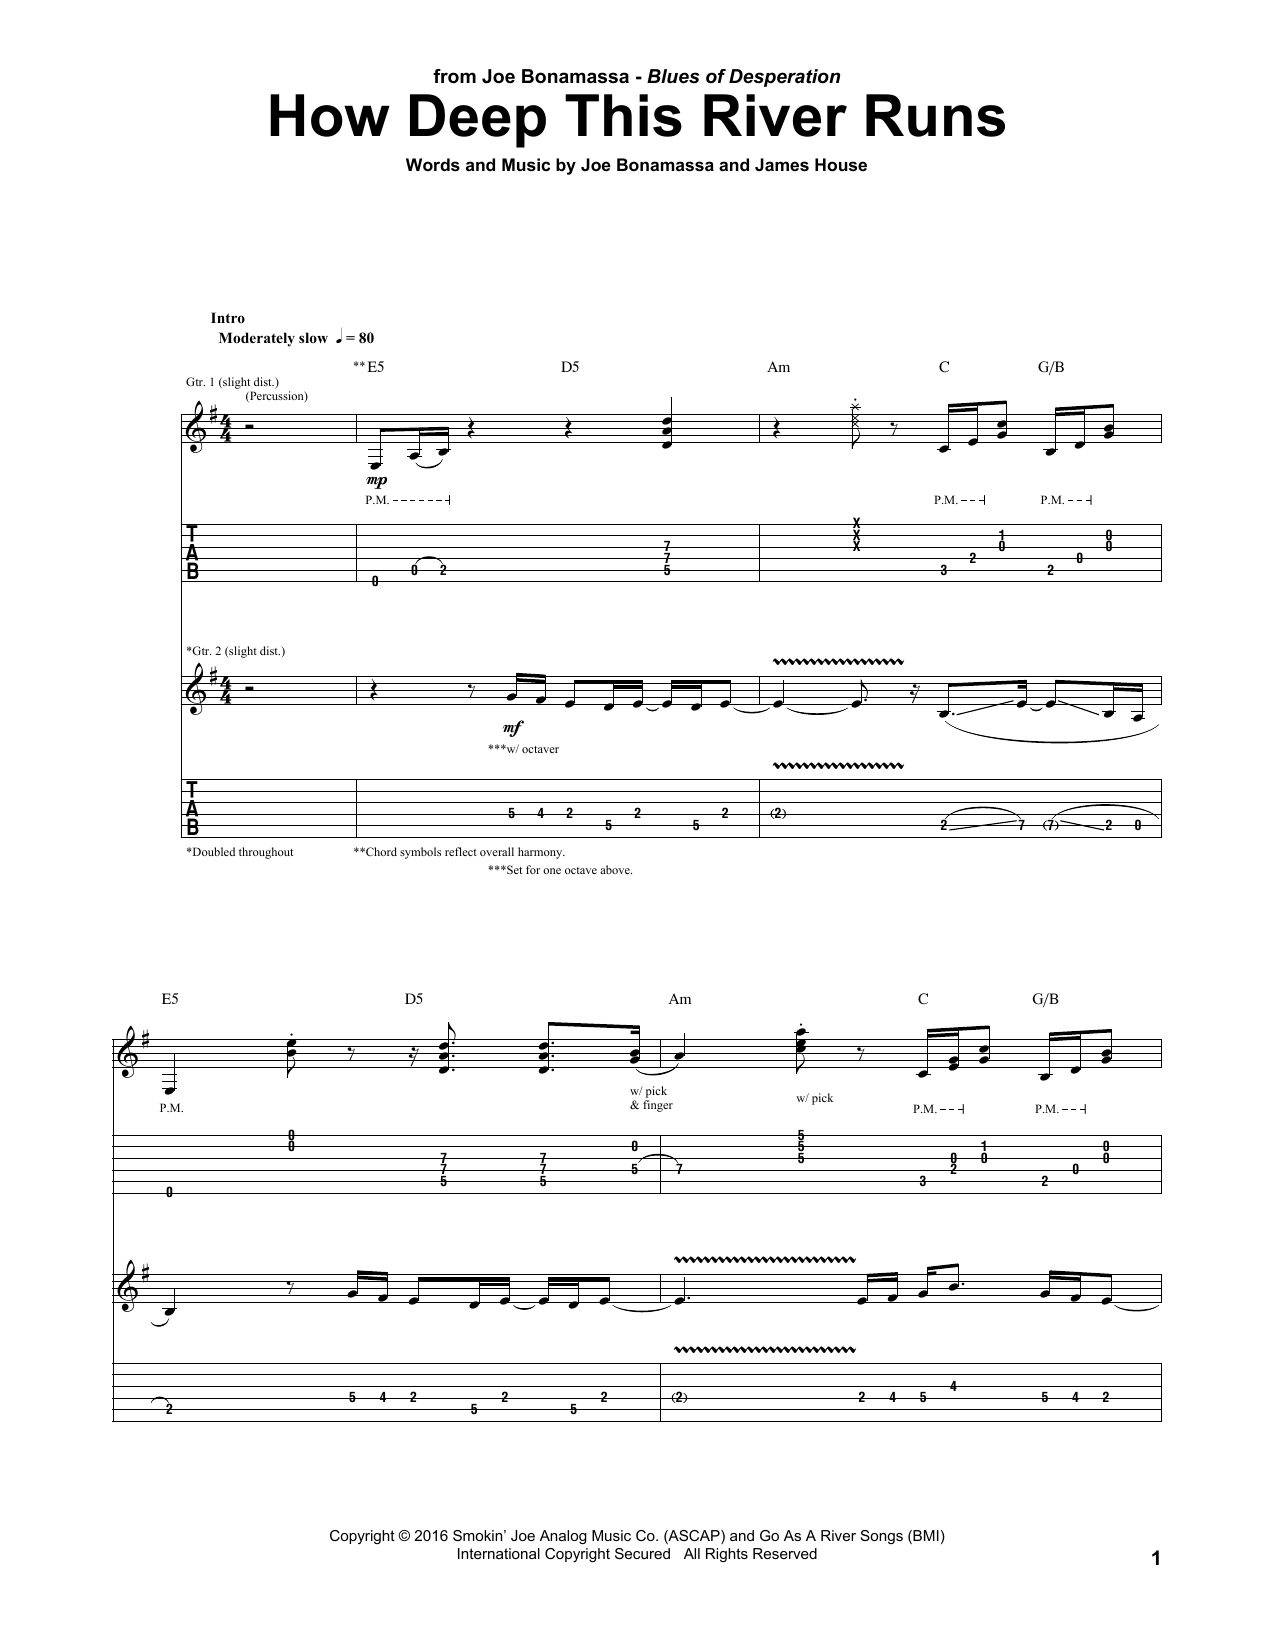 Download Joe Bonamassa How Deep This River Runs Sheet Music and learn how to play Guitar Tab PDF digital score in minutes